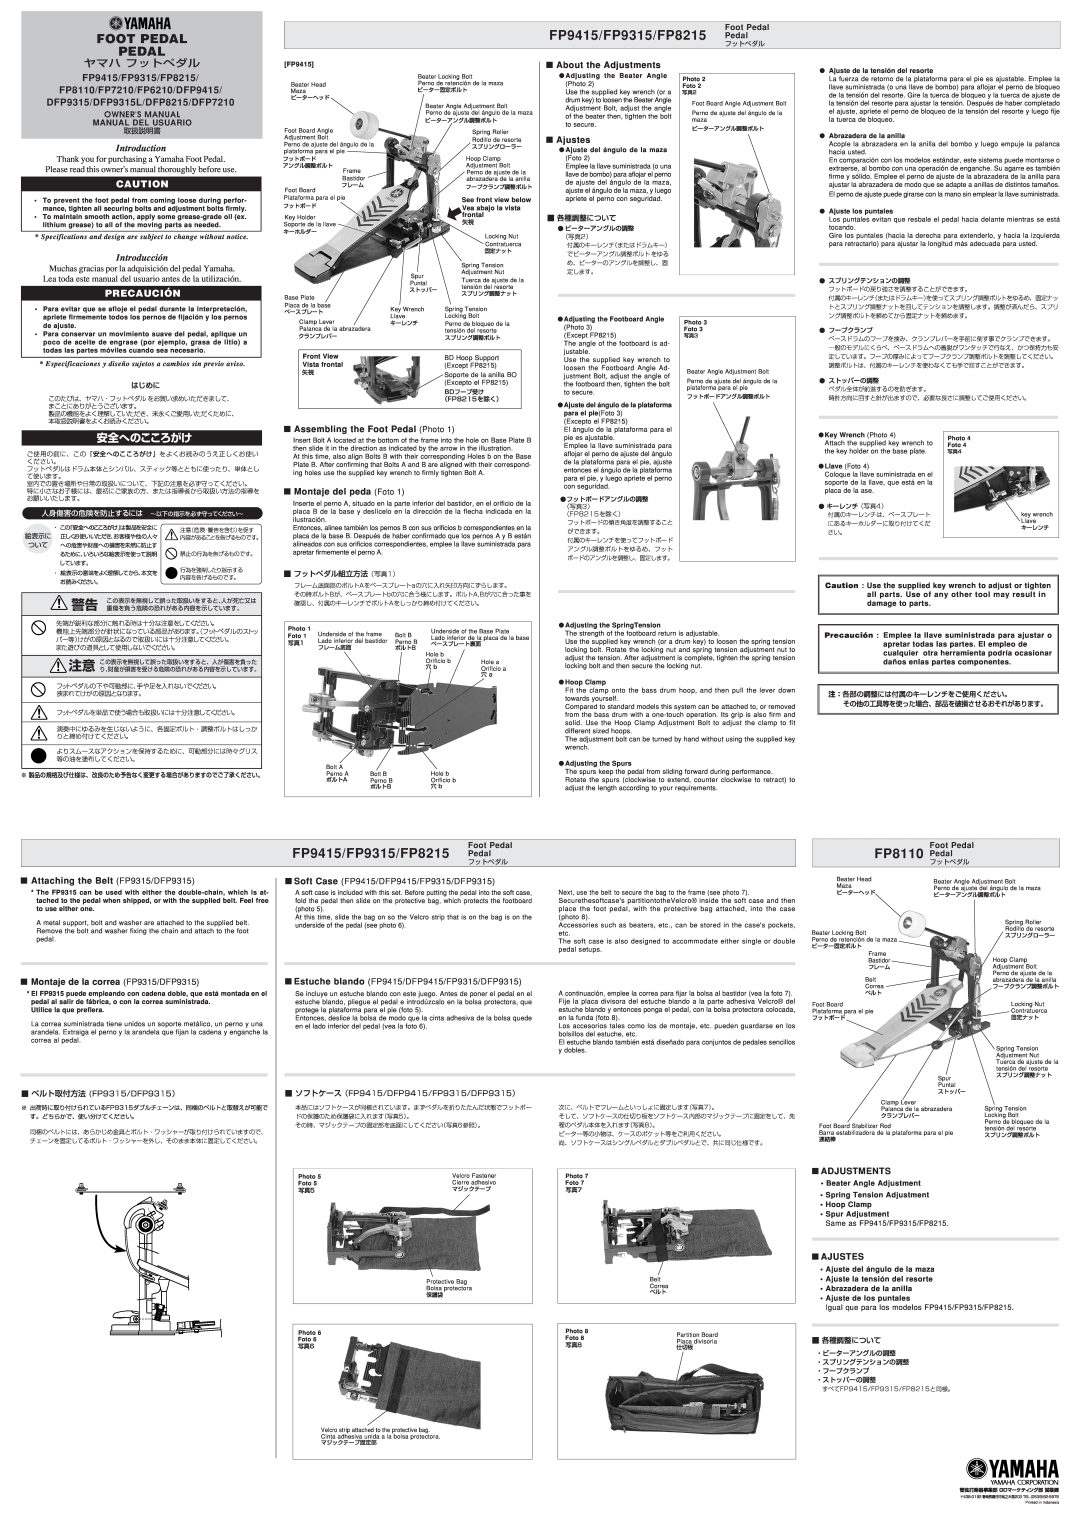 Yamaha owner manual FP9415/FP9315/FP8215 Pedal, FP8110 Pedal, Foot Pedal Pedal, 安全へのこころがけ, ヤマハ フットペダル, Introduction 